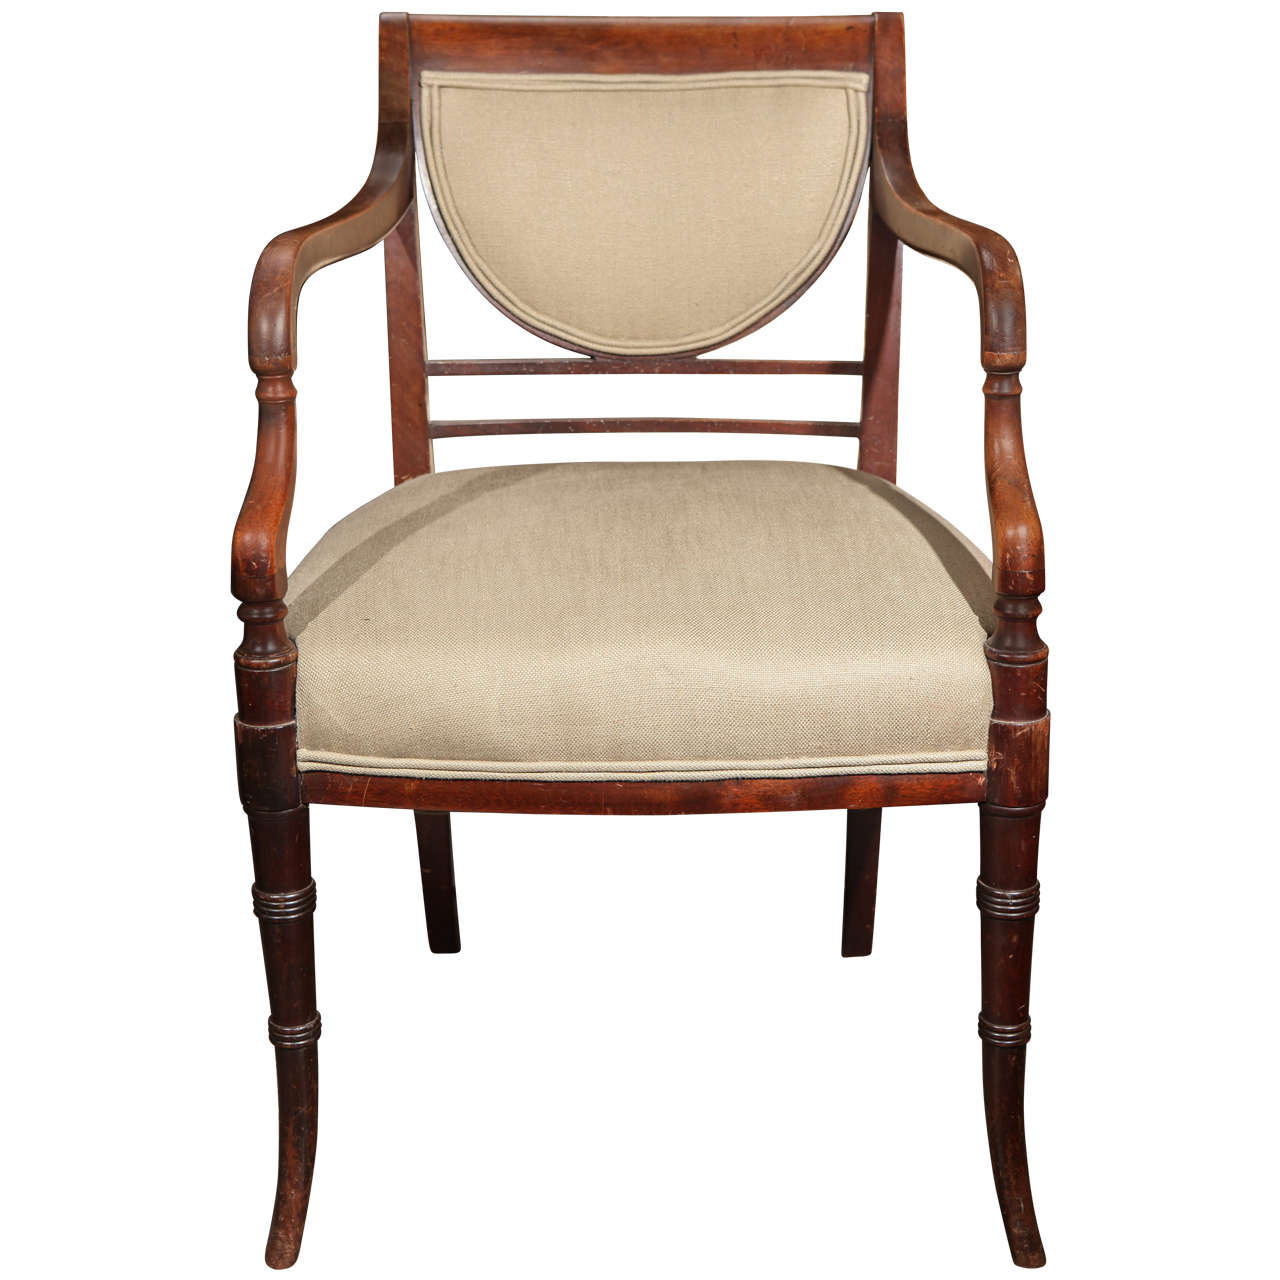 19th Century English Regency Upholstered Mahogany Chair